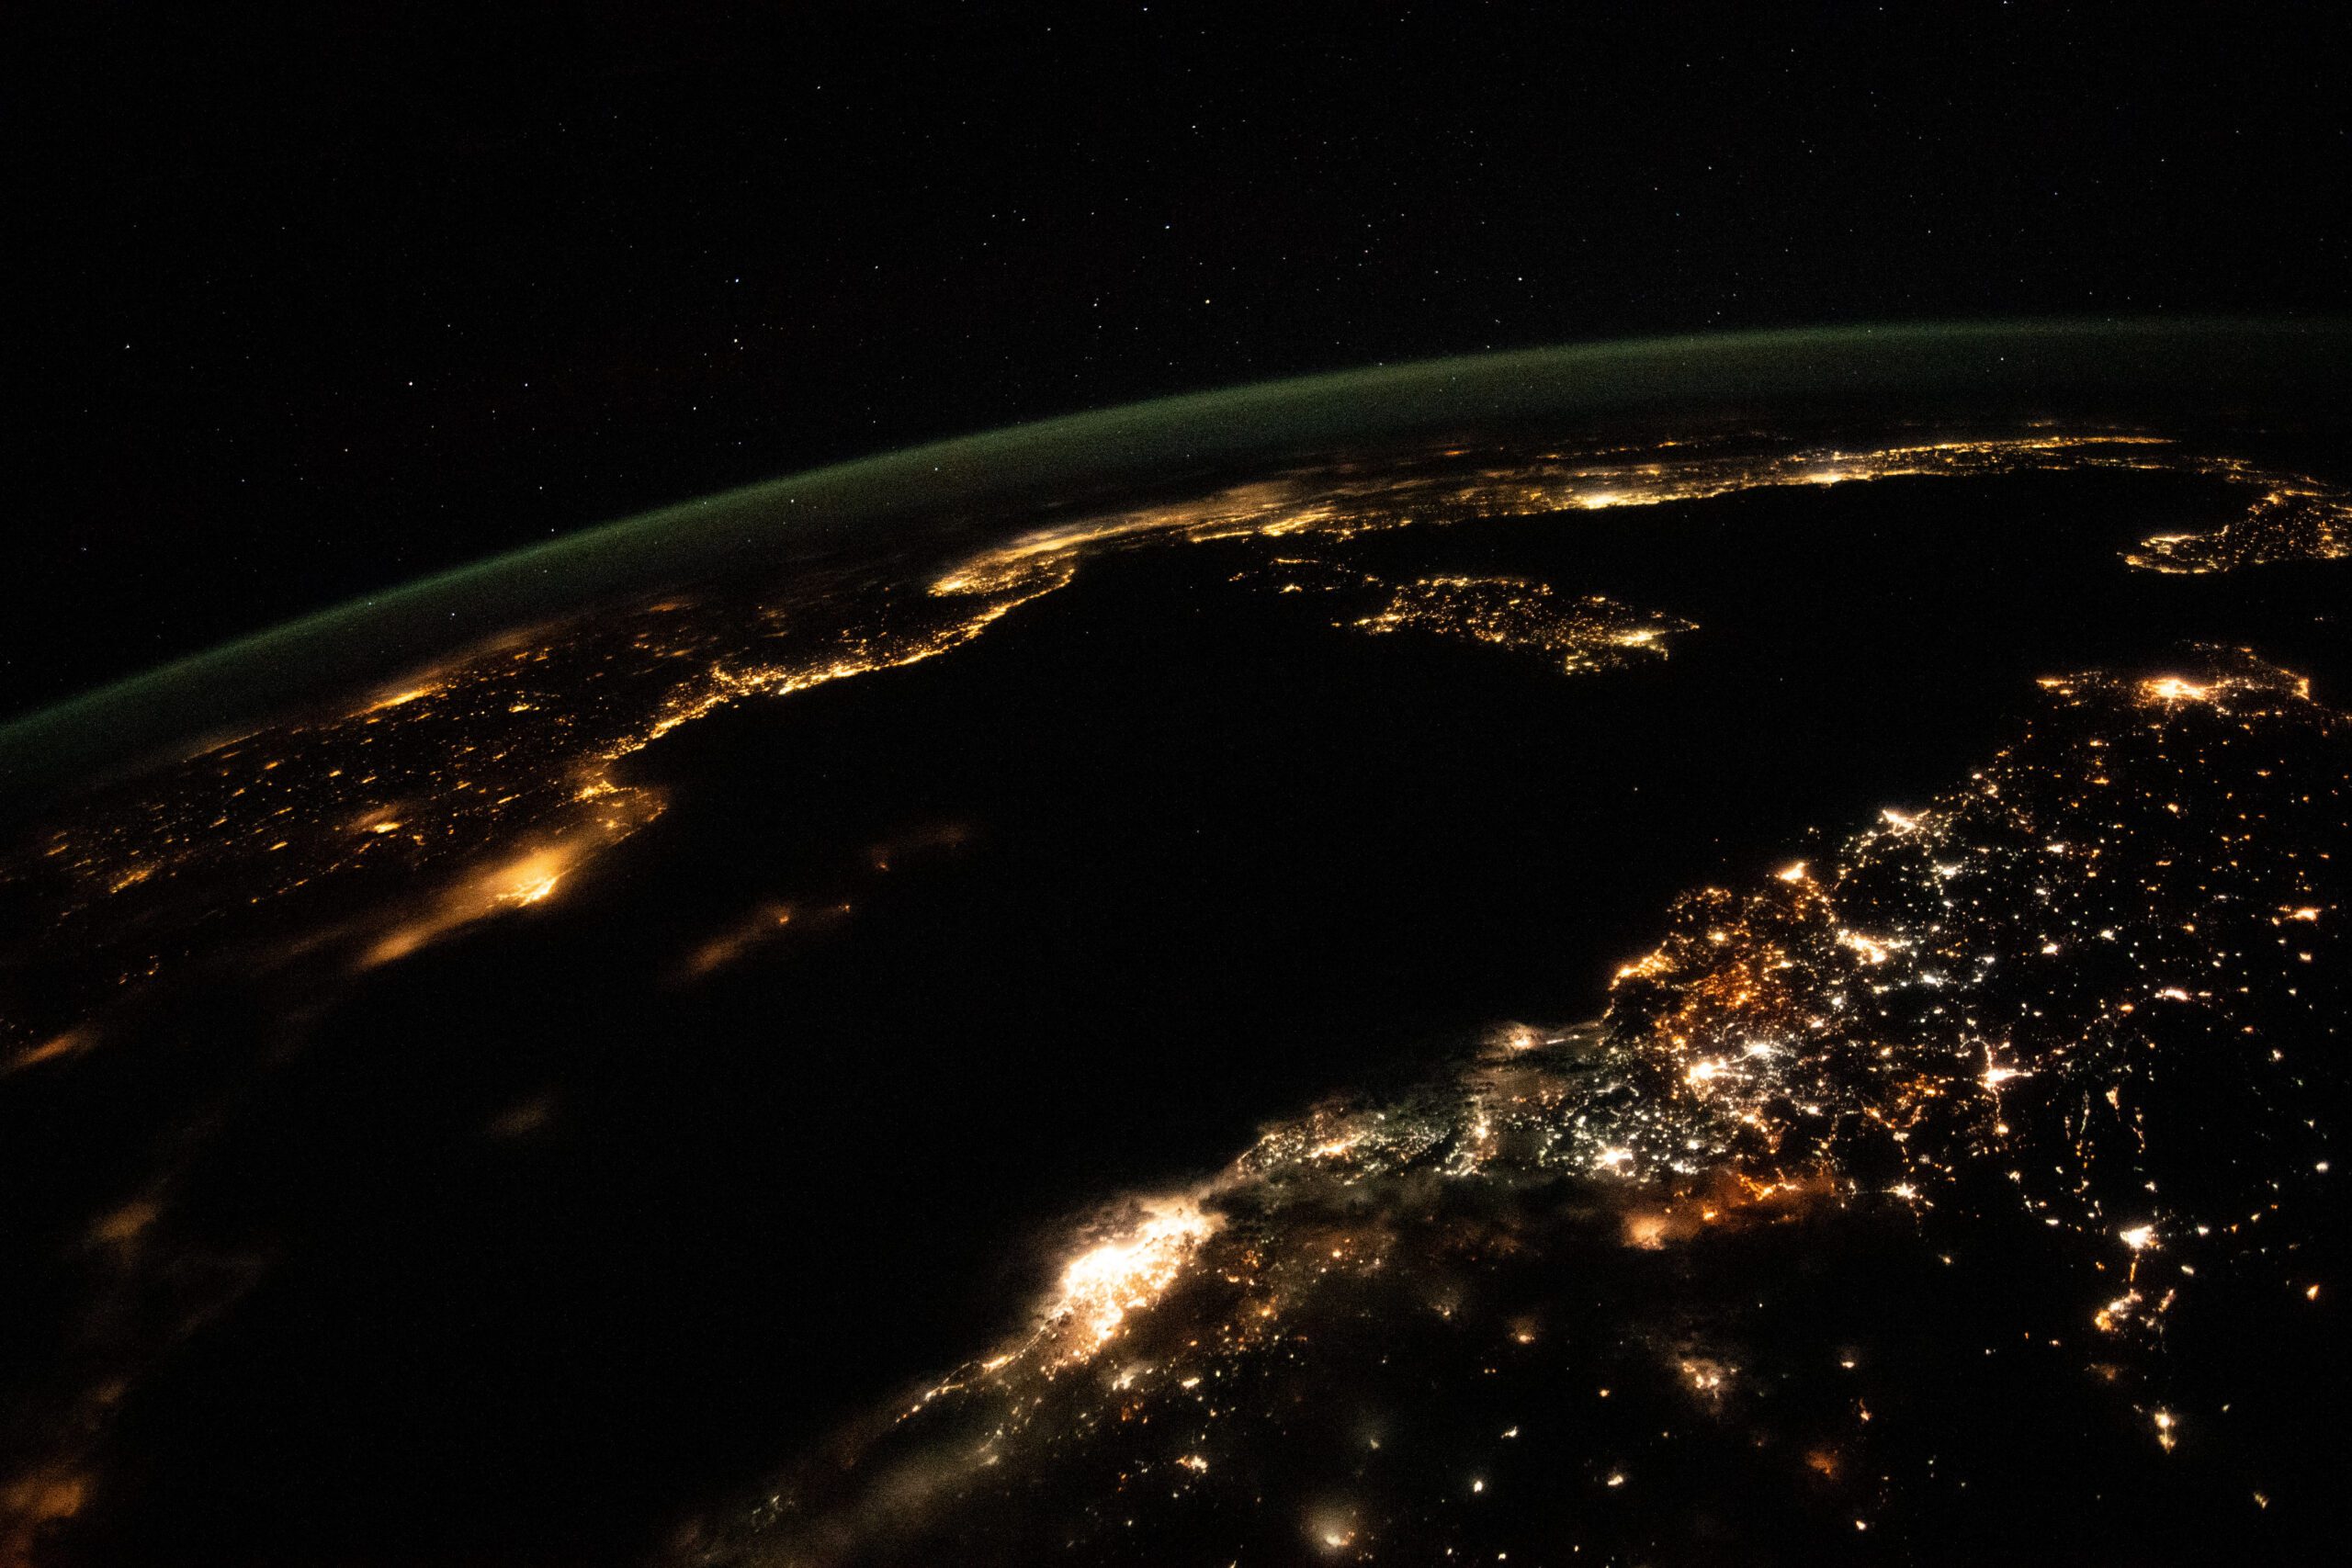 Mediterranean Cities Light Up the Night